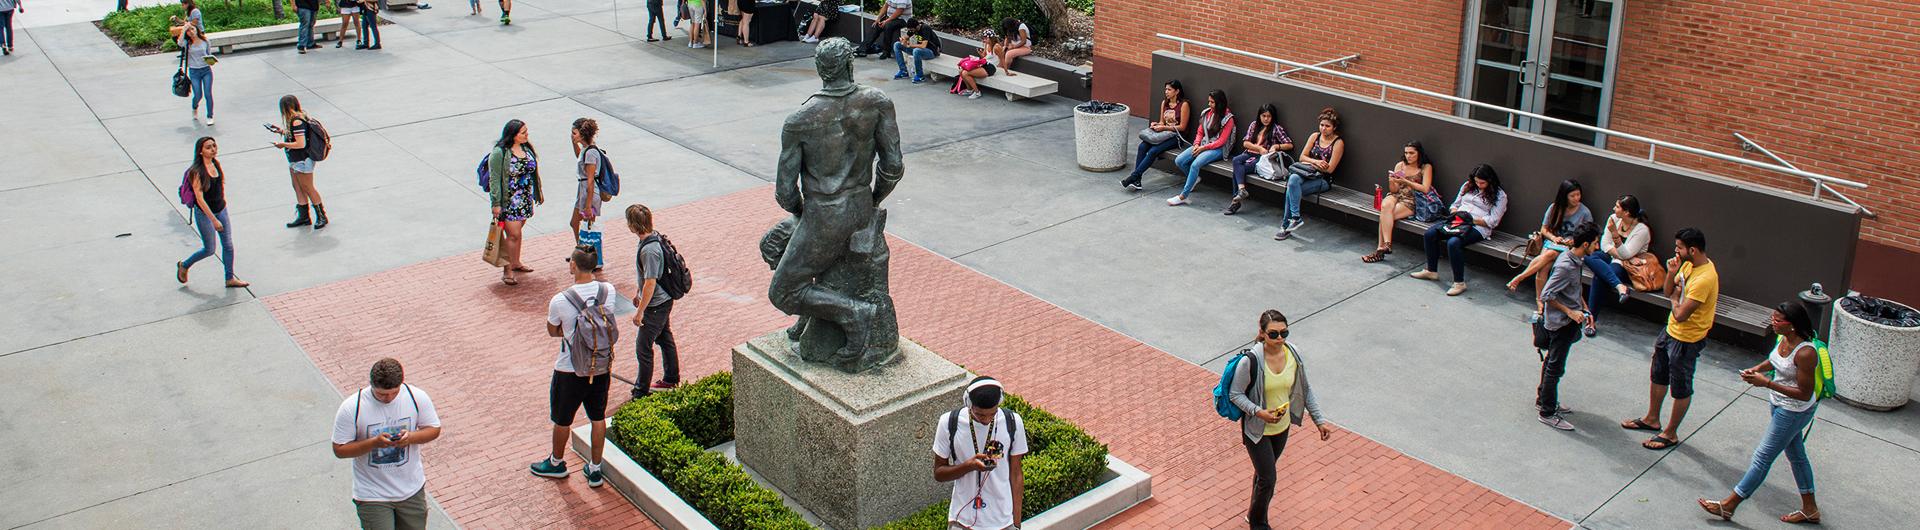 CSULB student congregate around the Prospector Pete statue on campus.